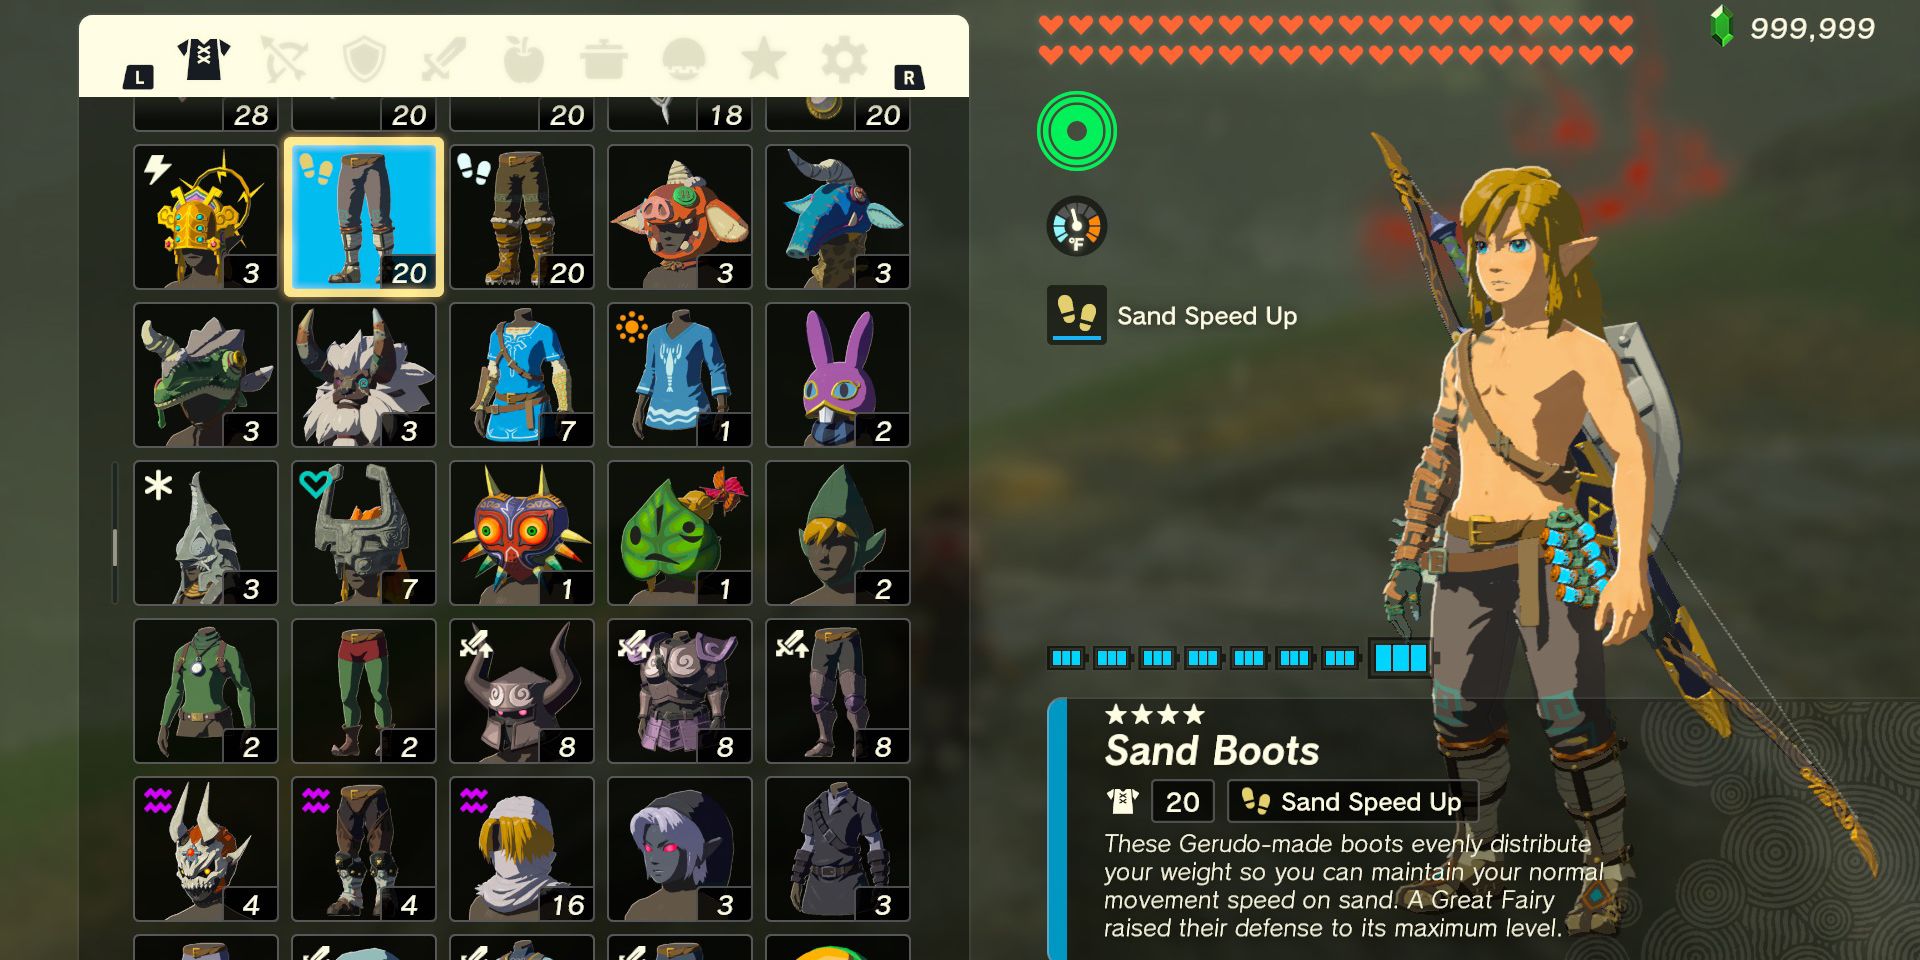 The Sandboot armor piece in The Legend of Zelda: Tears of the Kingdom